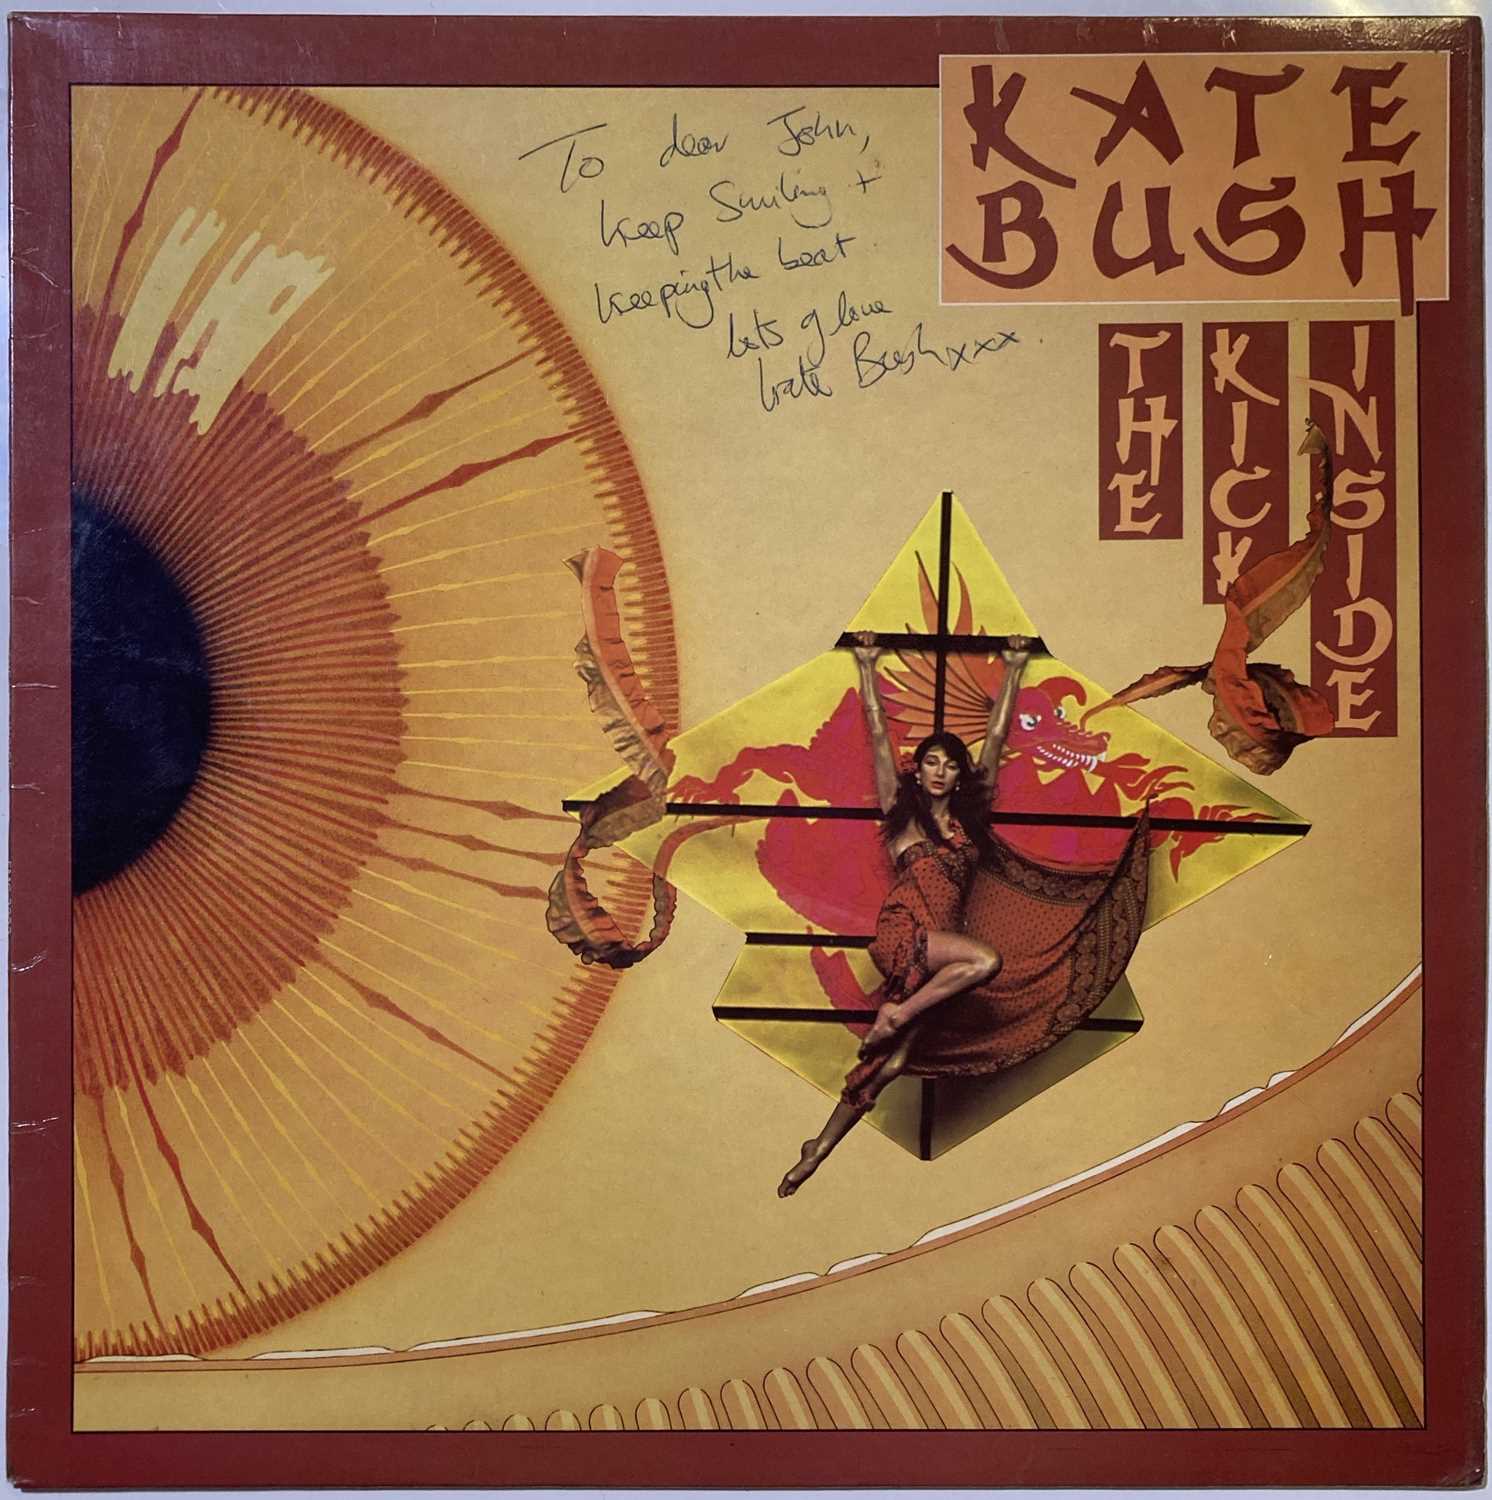 Lot 199 - KATE BUSH - SIGNED LP.